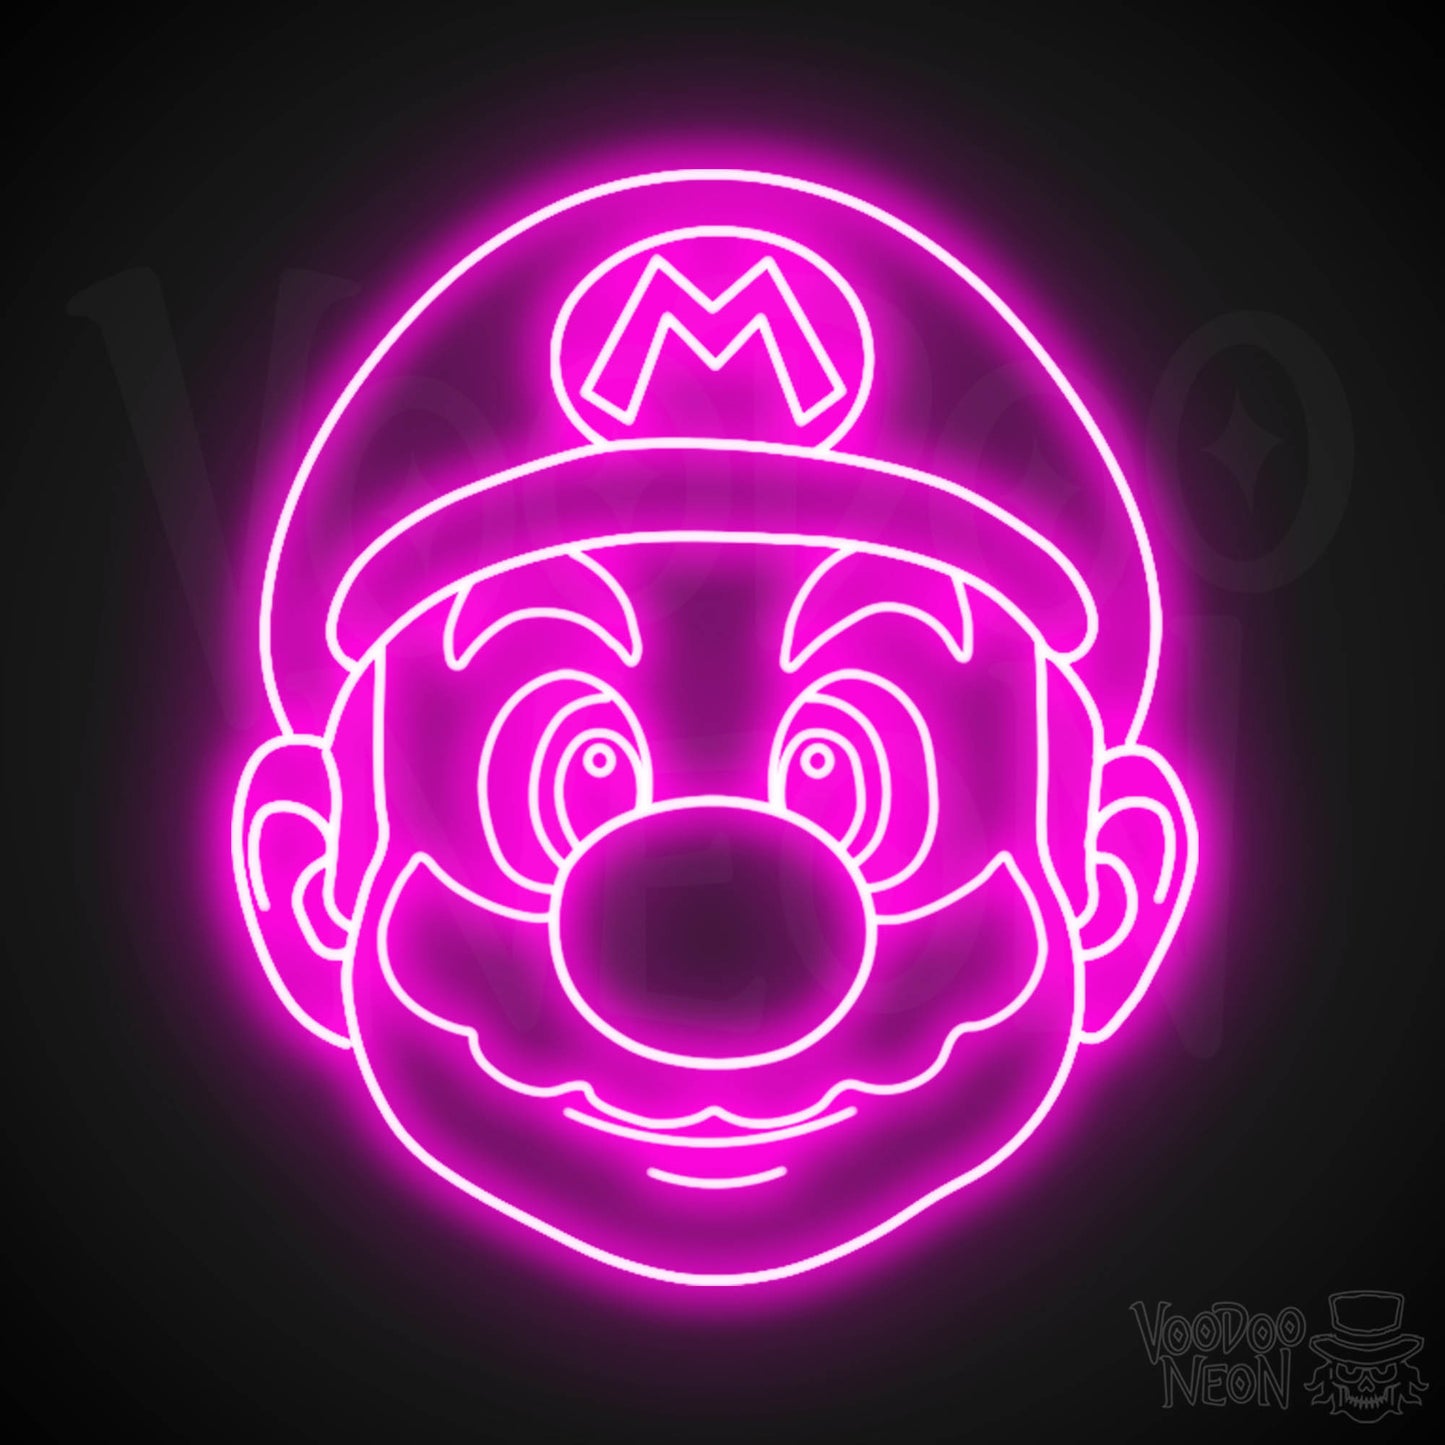 Mario Neon Sign - Mario Sign - Mario Wall Art - LED Neon Wall Art - Color Pink